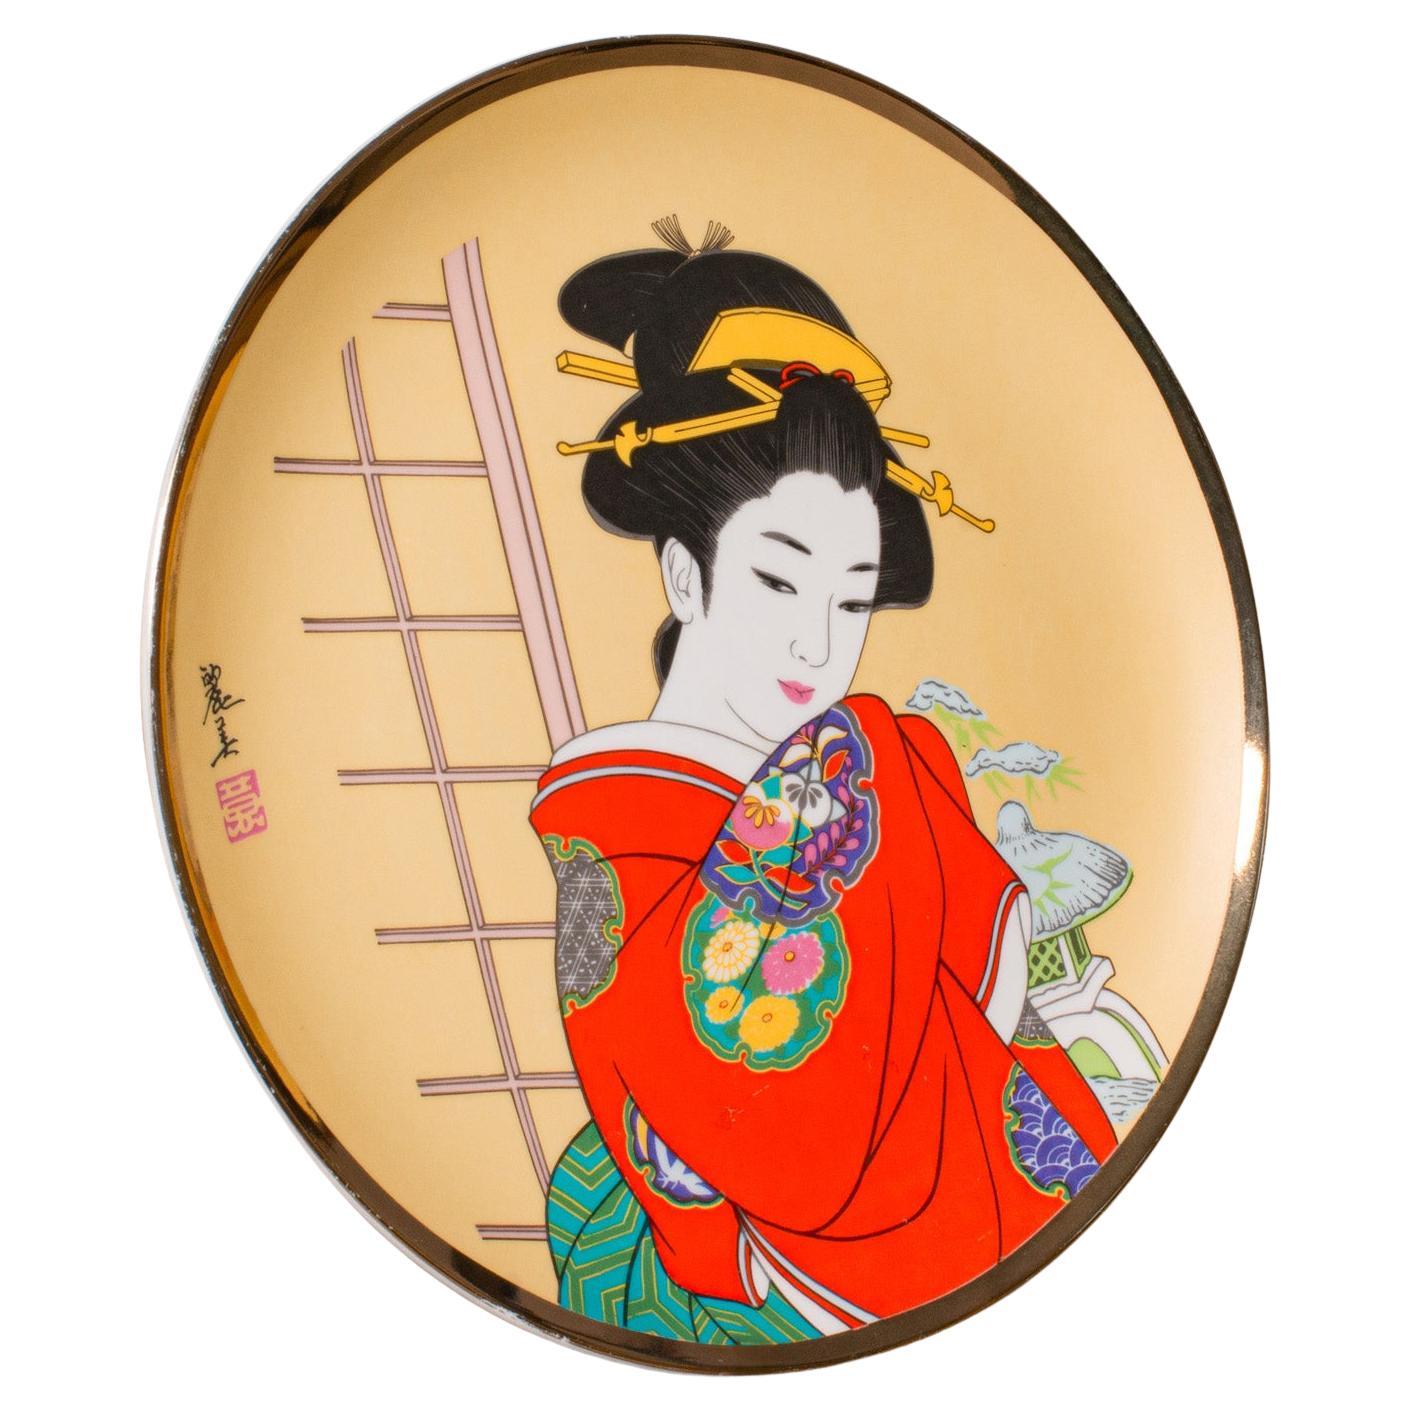 Vintage Ukiyo-e Display Plate, Japanese, Ceramic, Decorative Dish, Geisha Figure